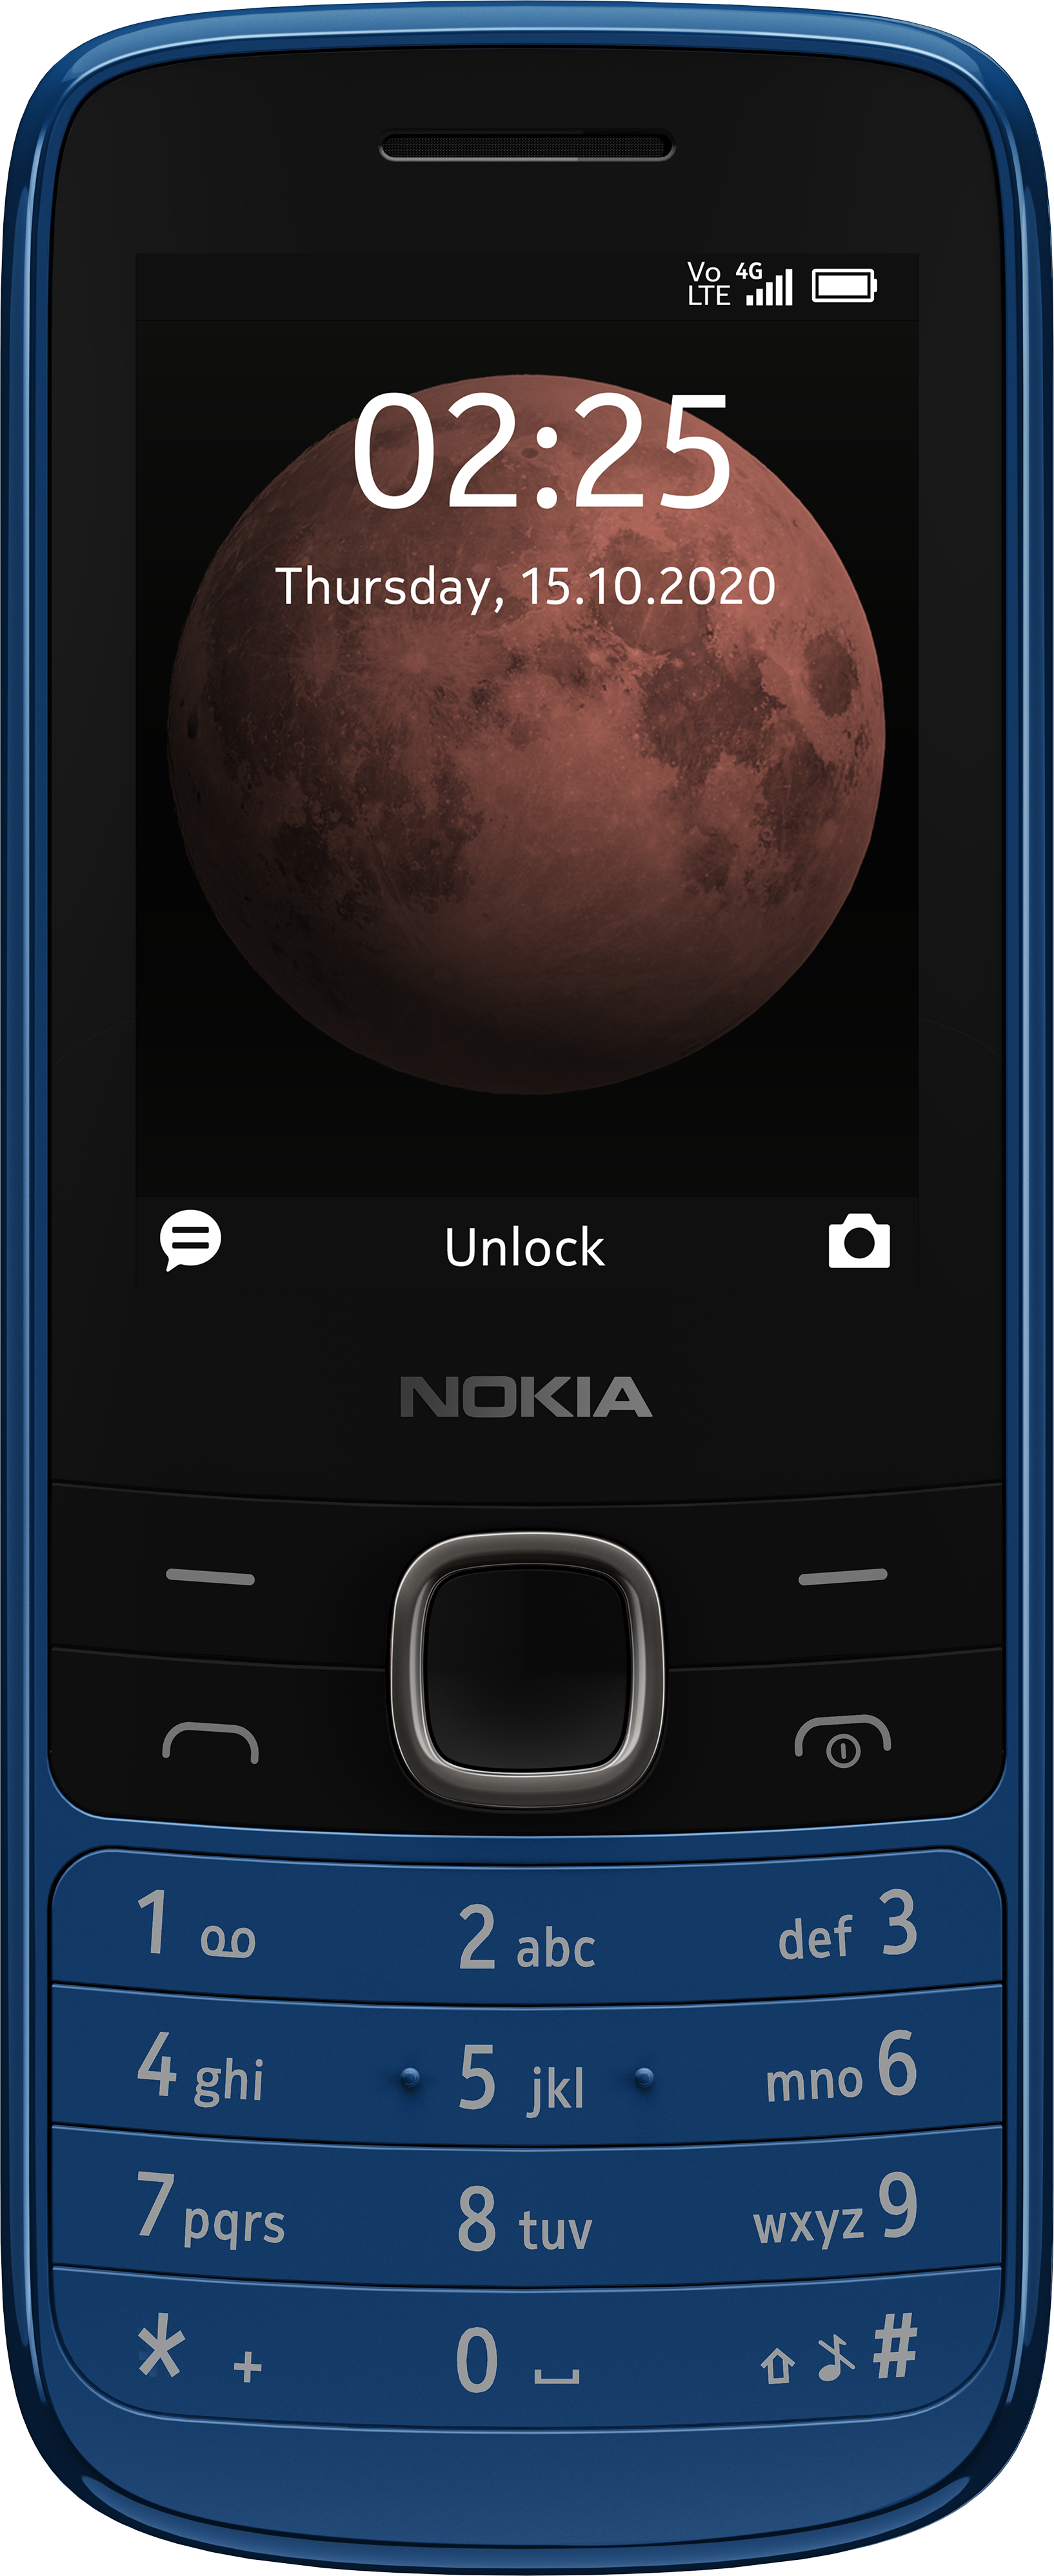 Nokia 225 4G mobile